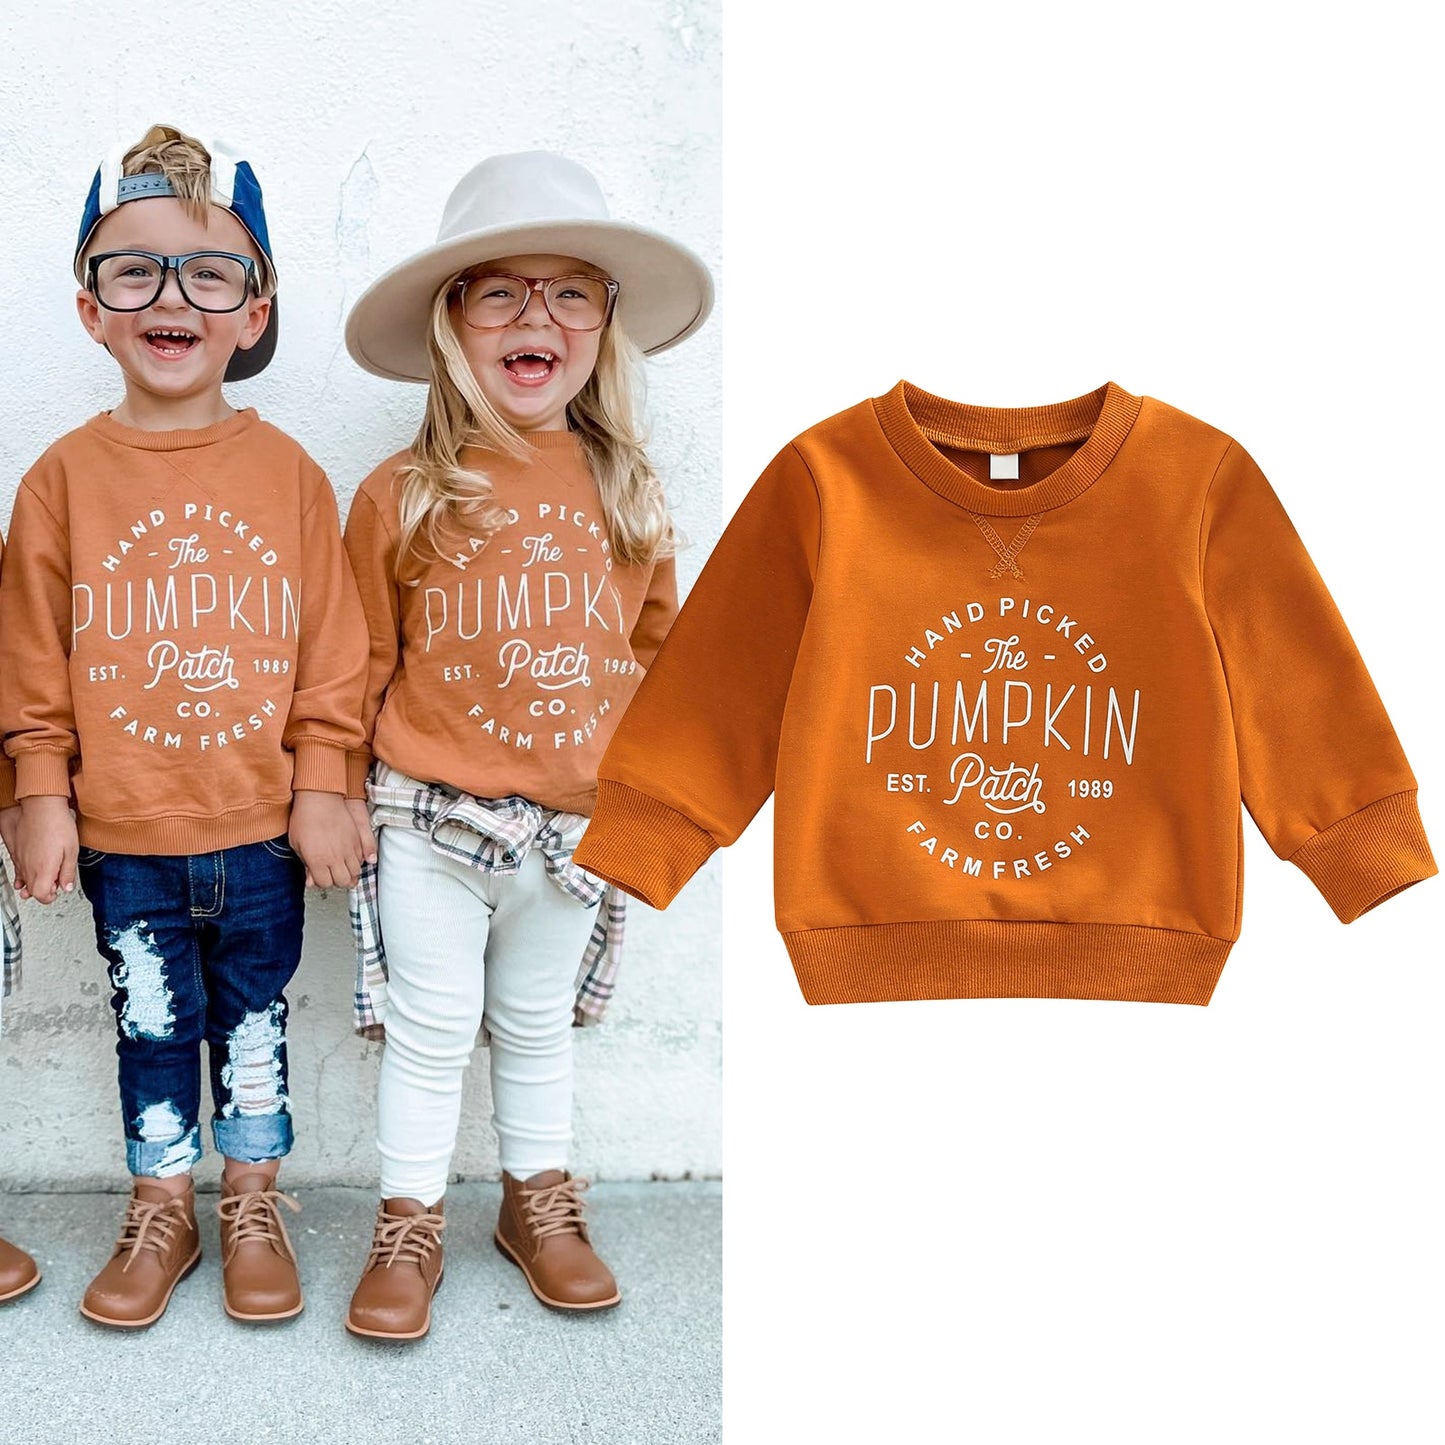 "Hand Picked Pumpkin" Toddler Baby Girl Boy Sweatshirt